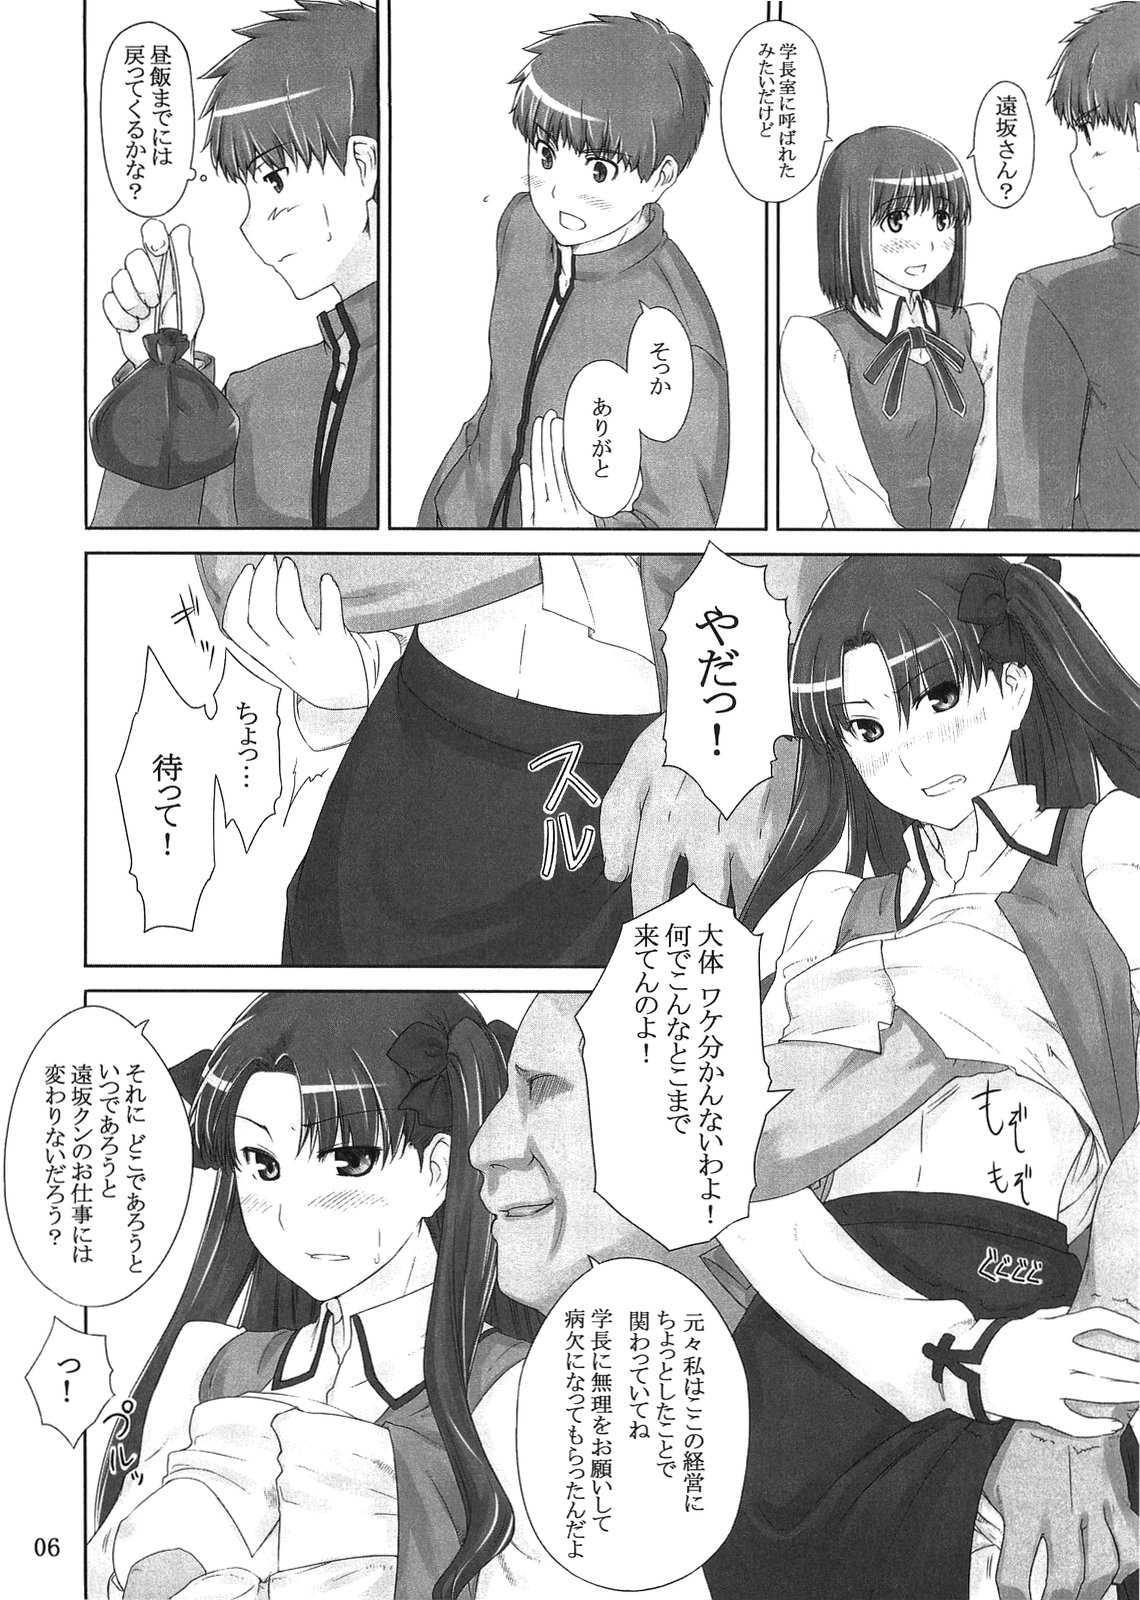 Girlnextdoor Tohsaka-ke no Kakei Jijou 2 - Fate stay night Roughsex - Page 6